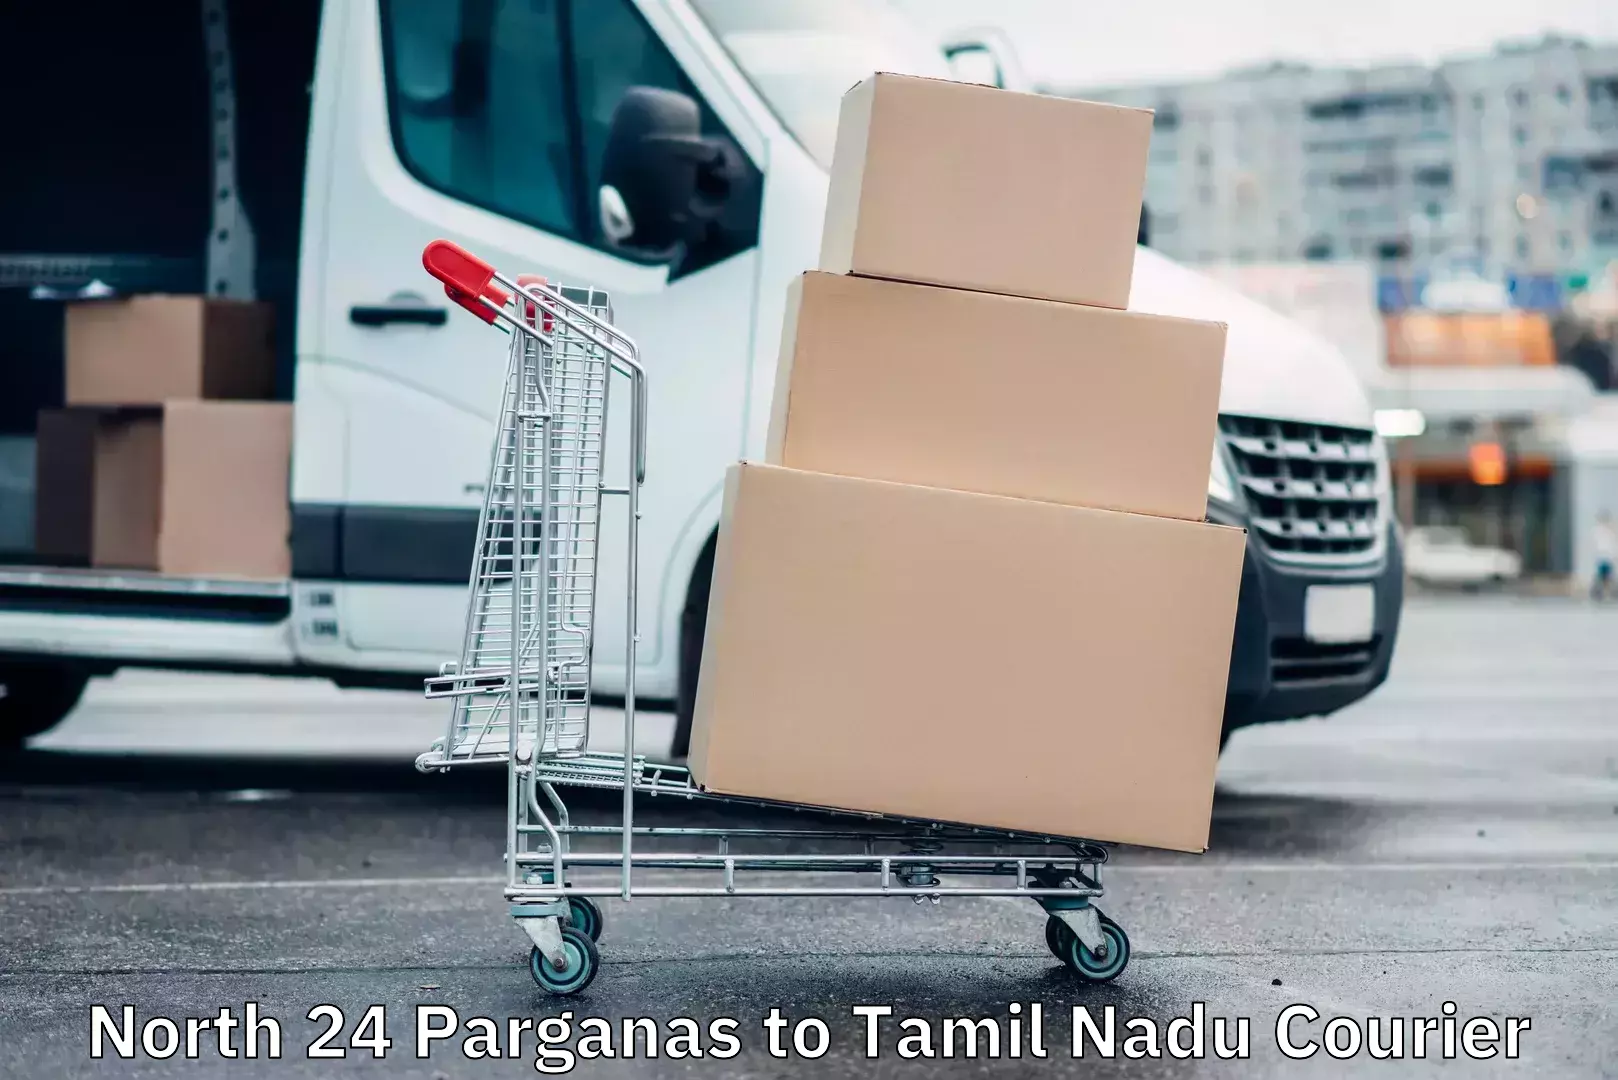 Courier service comparison North 24 Parganas to Tamil Nadu